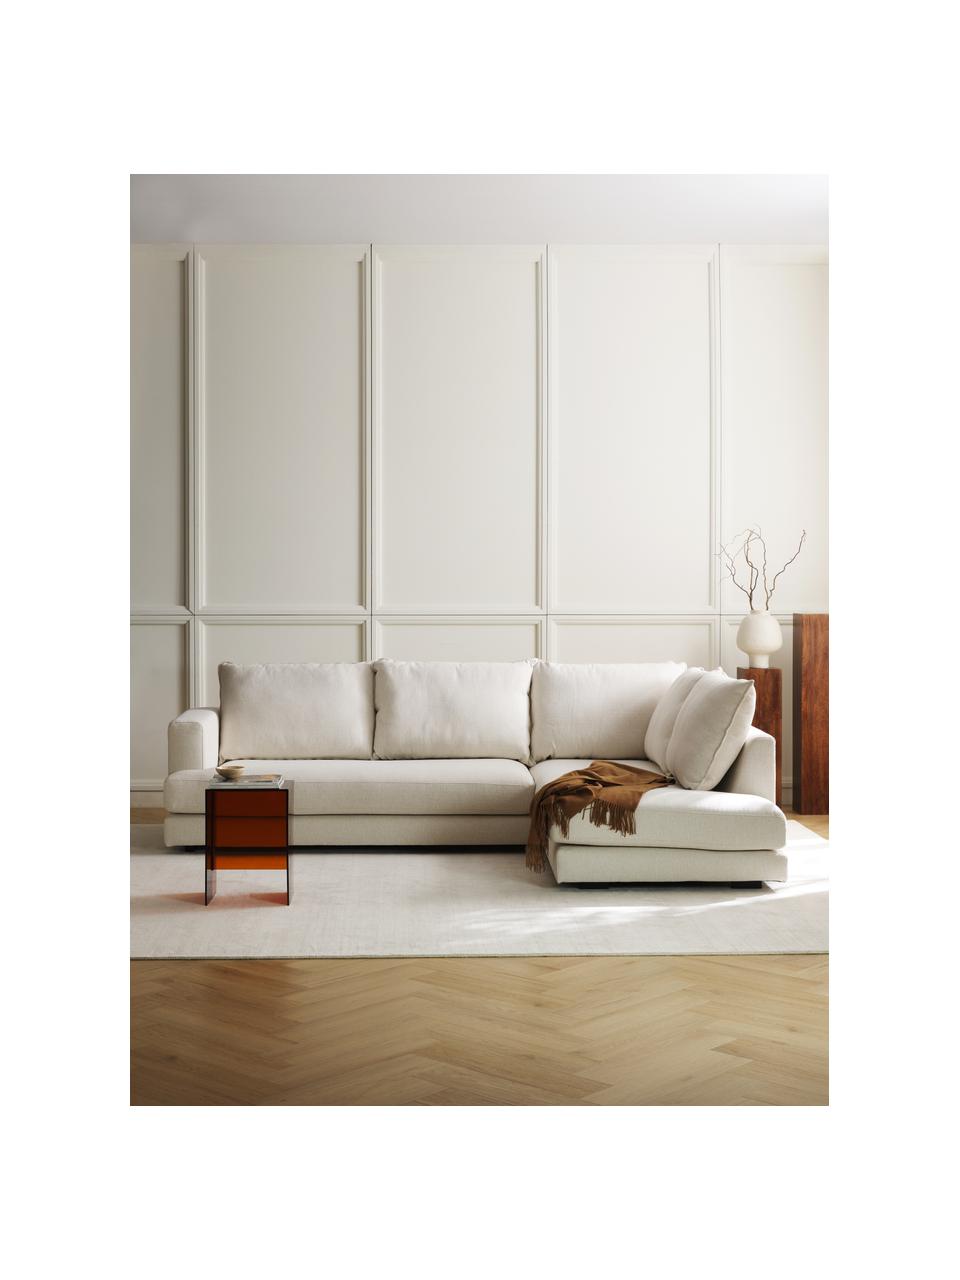 Rohová pohovka Tribeca, Krémově bílá, Š 274 cm, H 192 cm, pravé rohové provedení